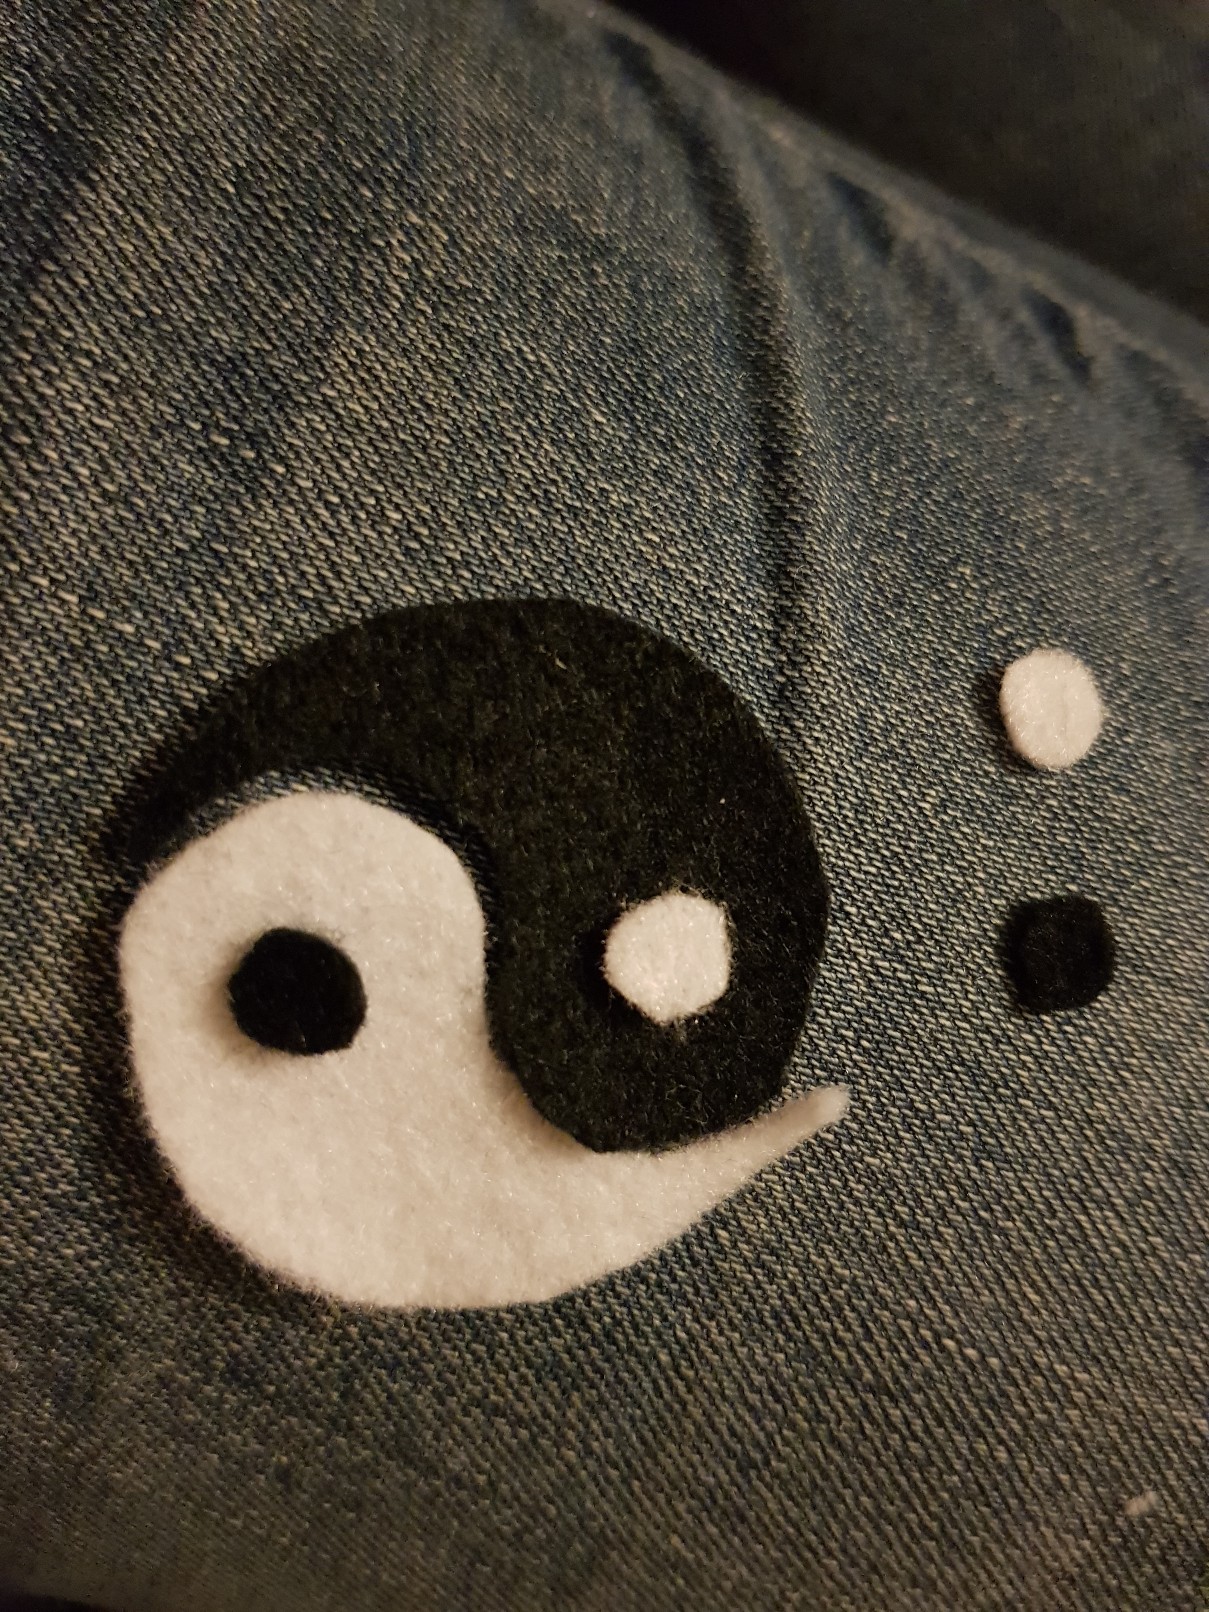 yin yang felt keychain parts assembled